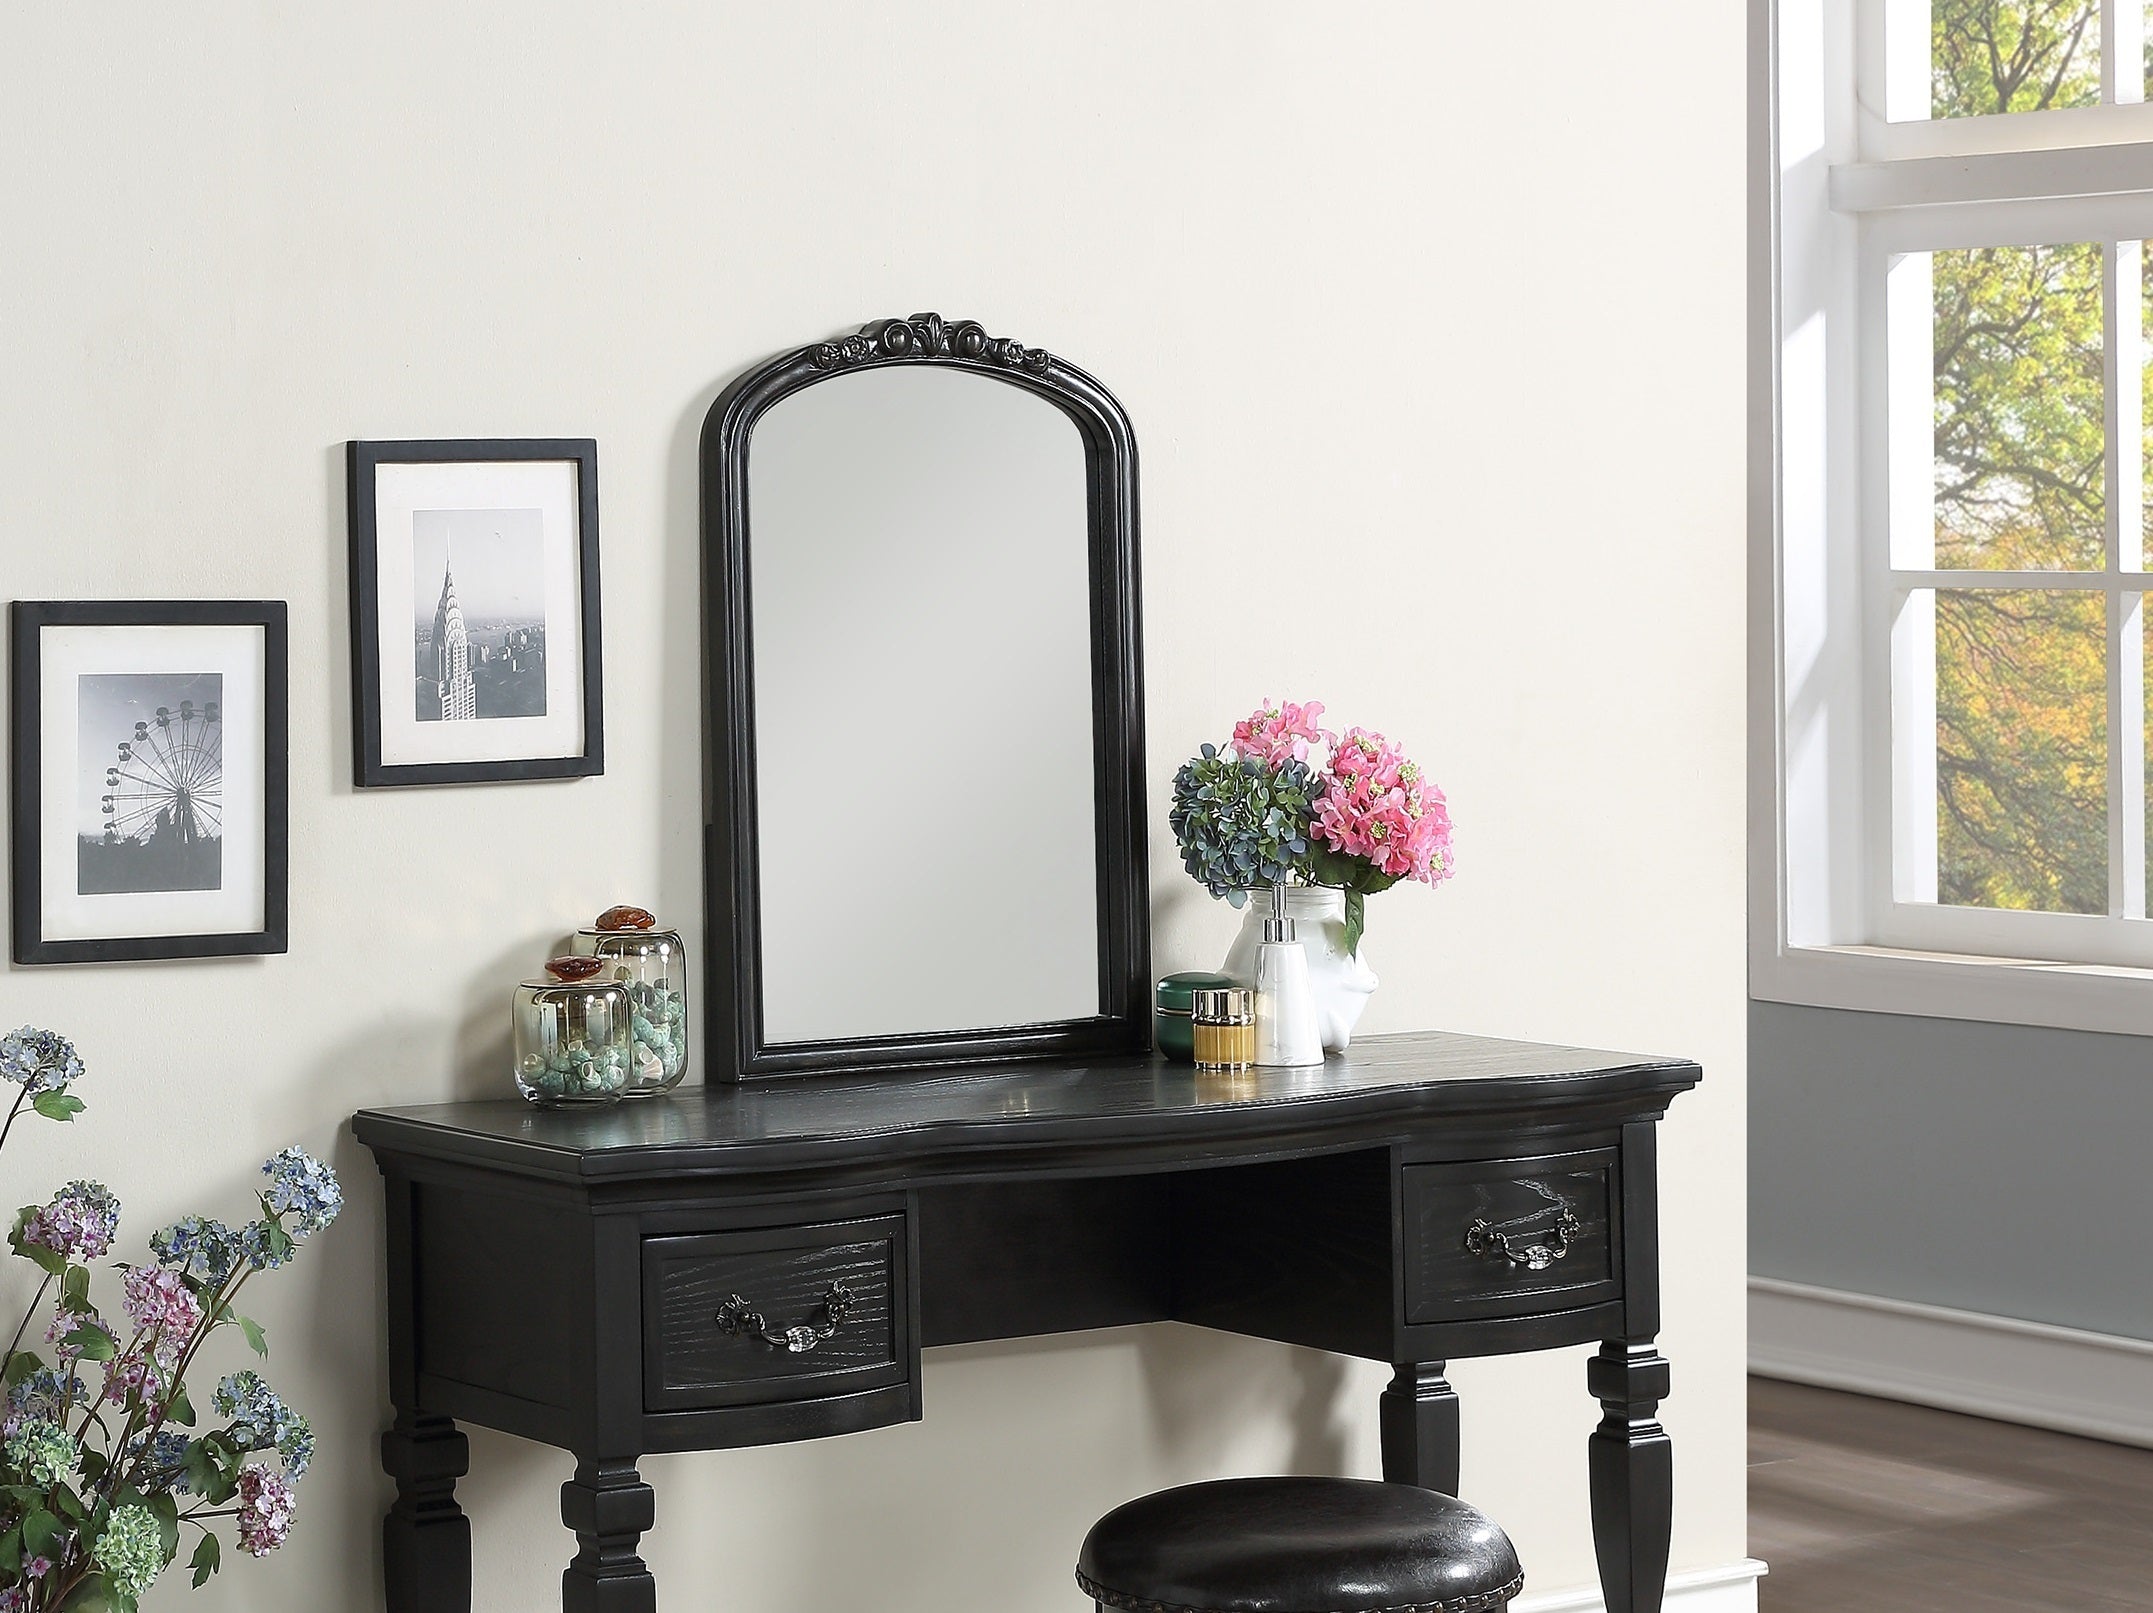 Bedroom Classic Vanity Set Wooden Carved Mirror Stool Drawers - Black